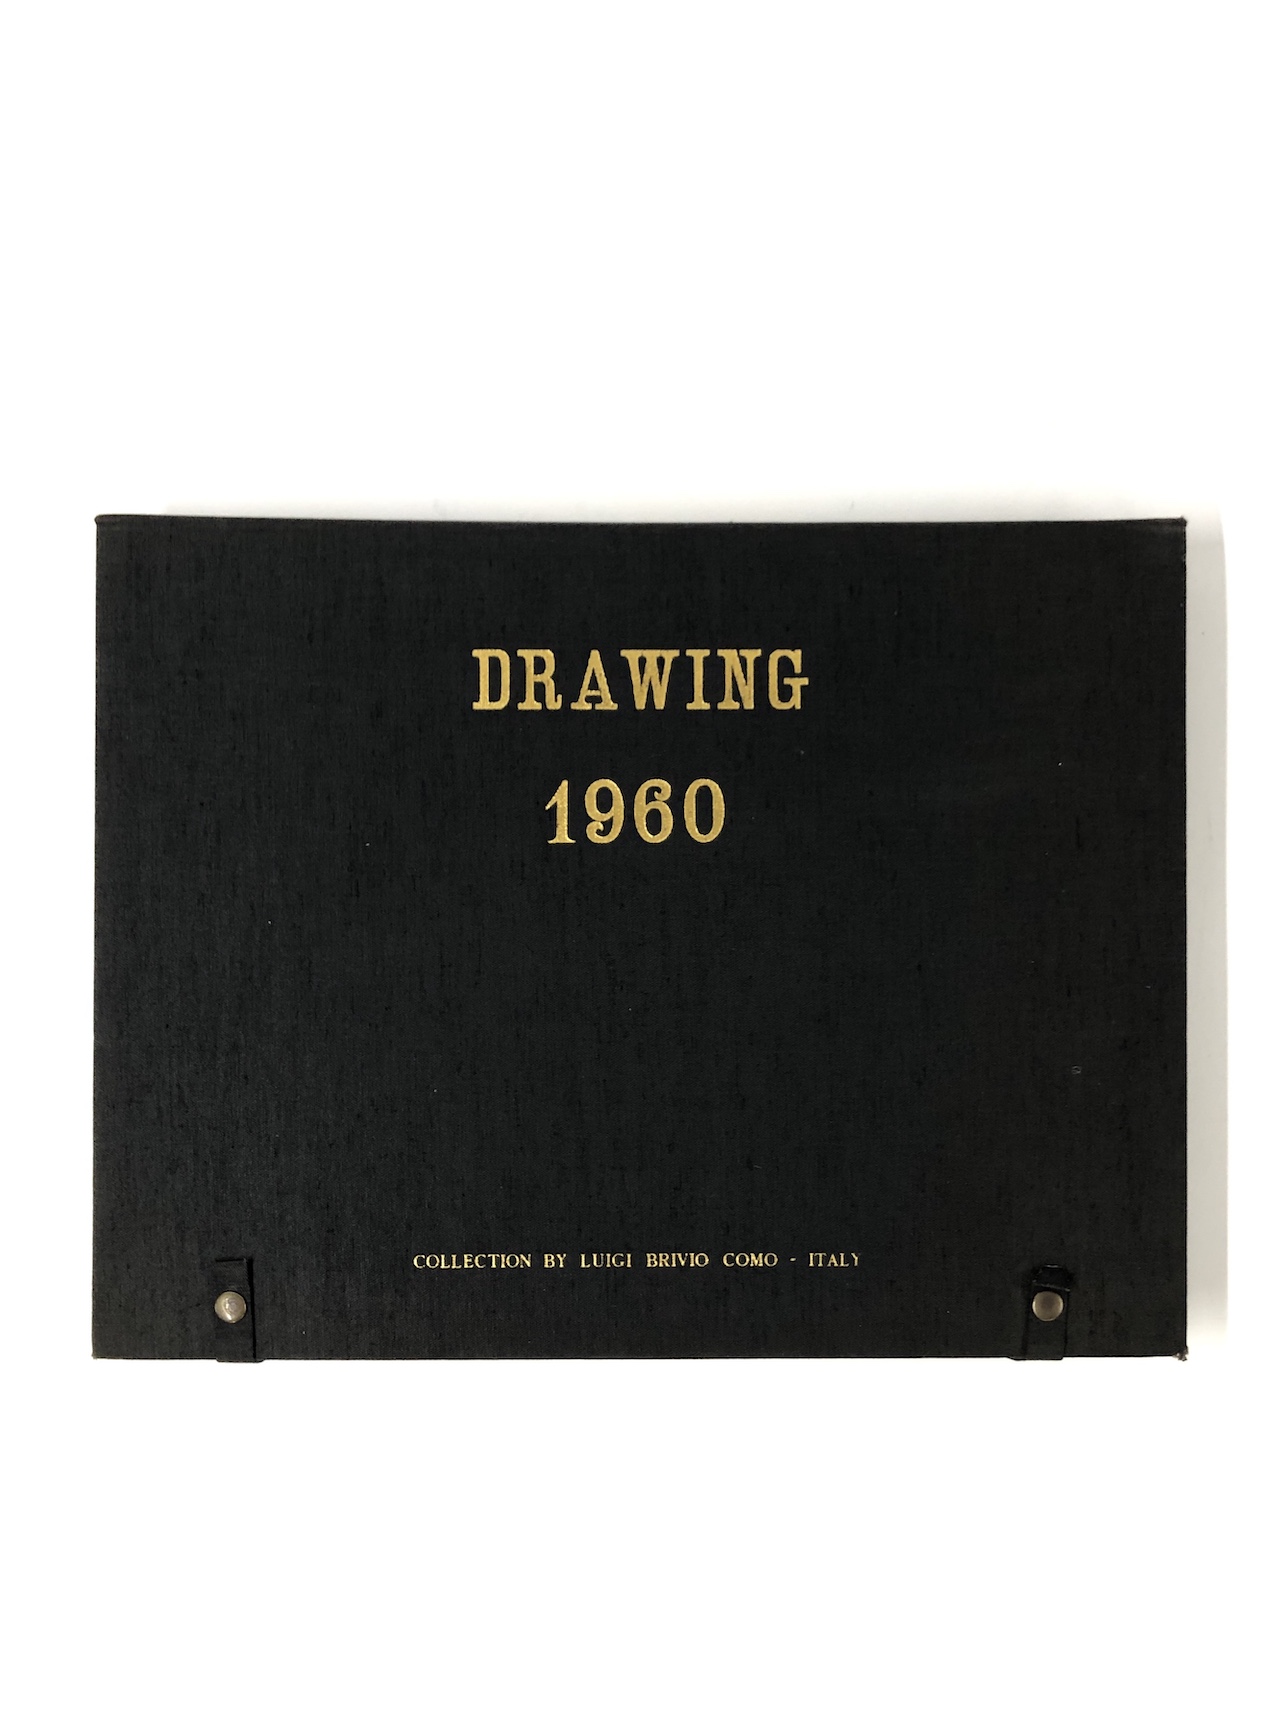 「DRAWING 1960 / ルイジ・ブリビオ」メイン画像